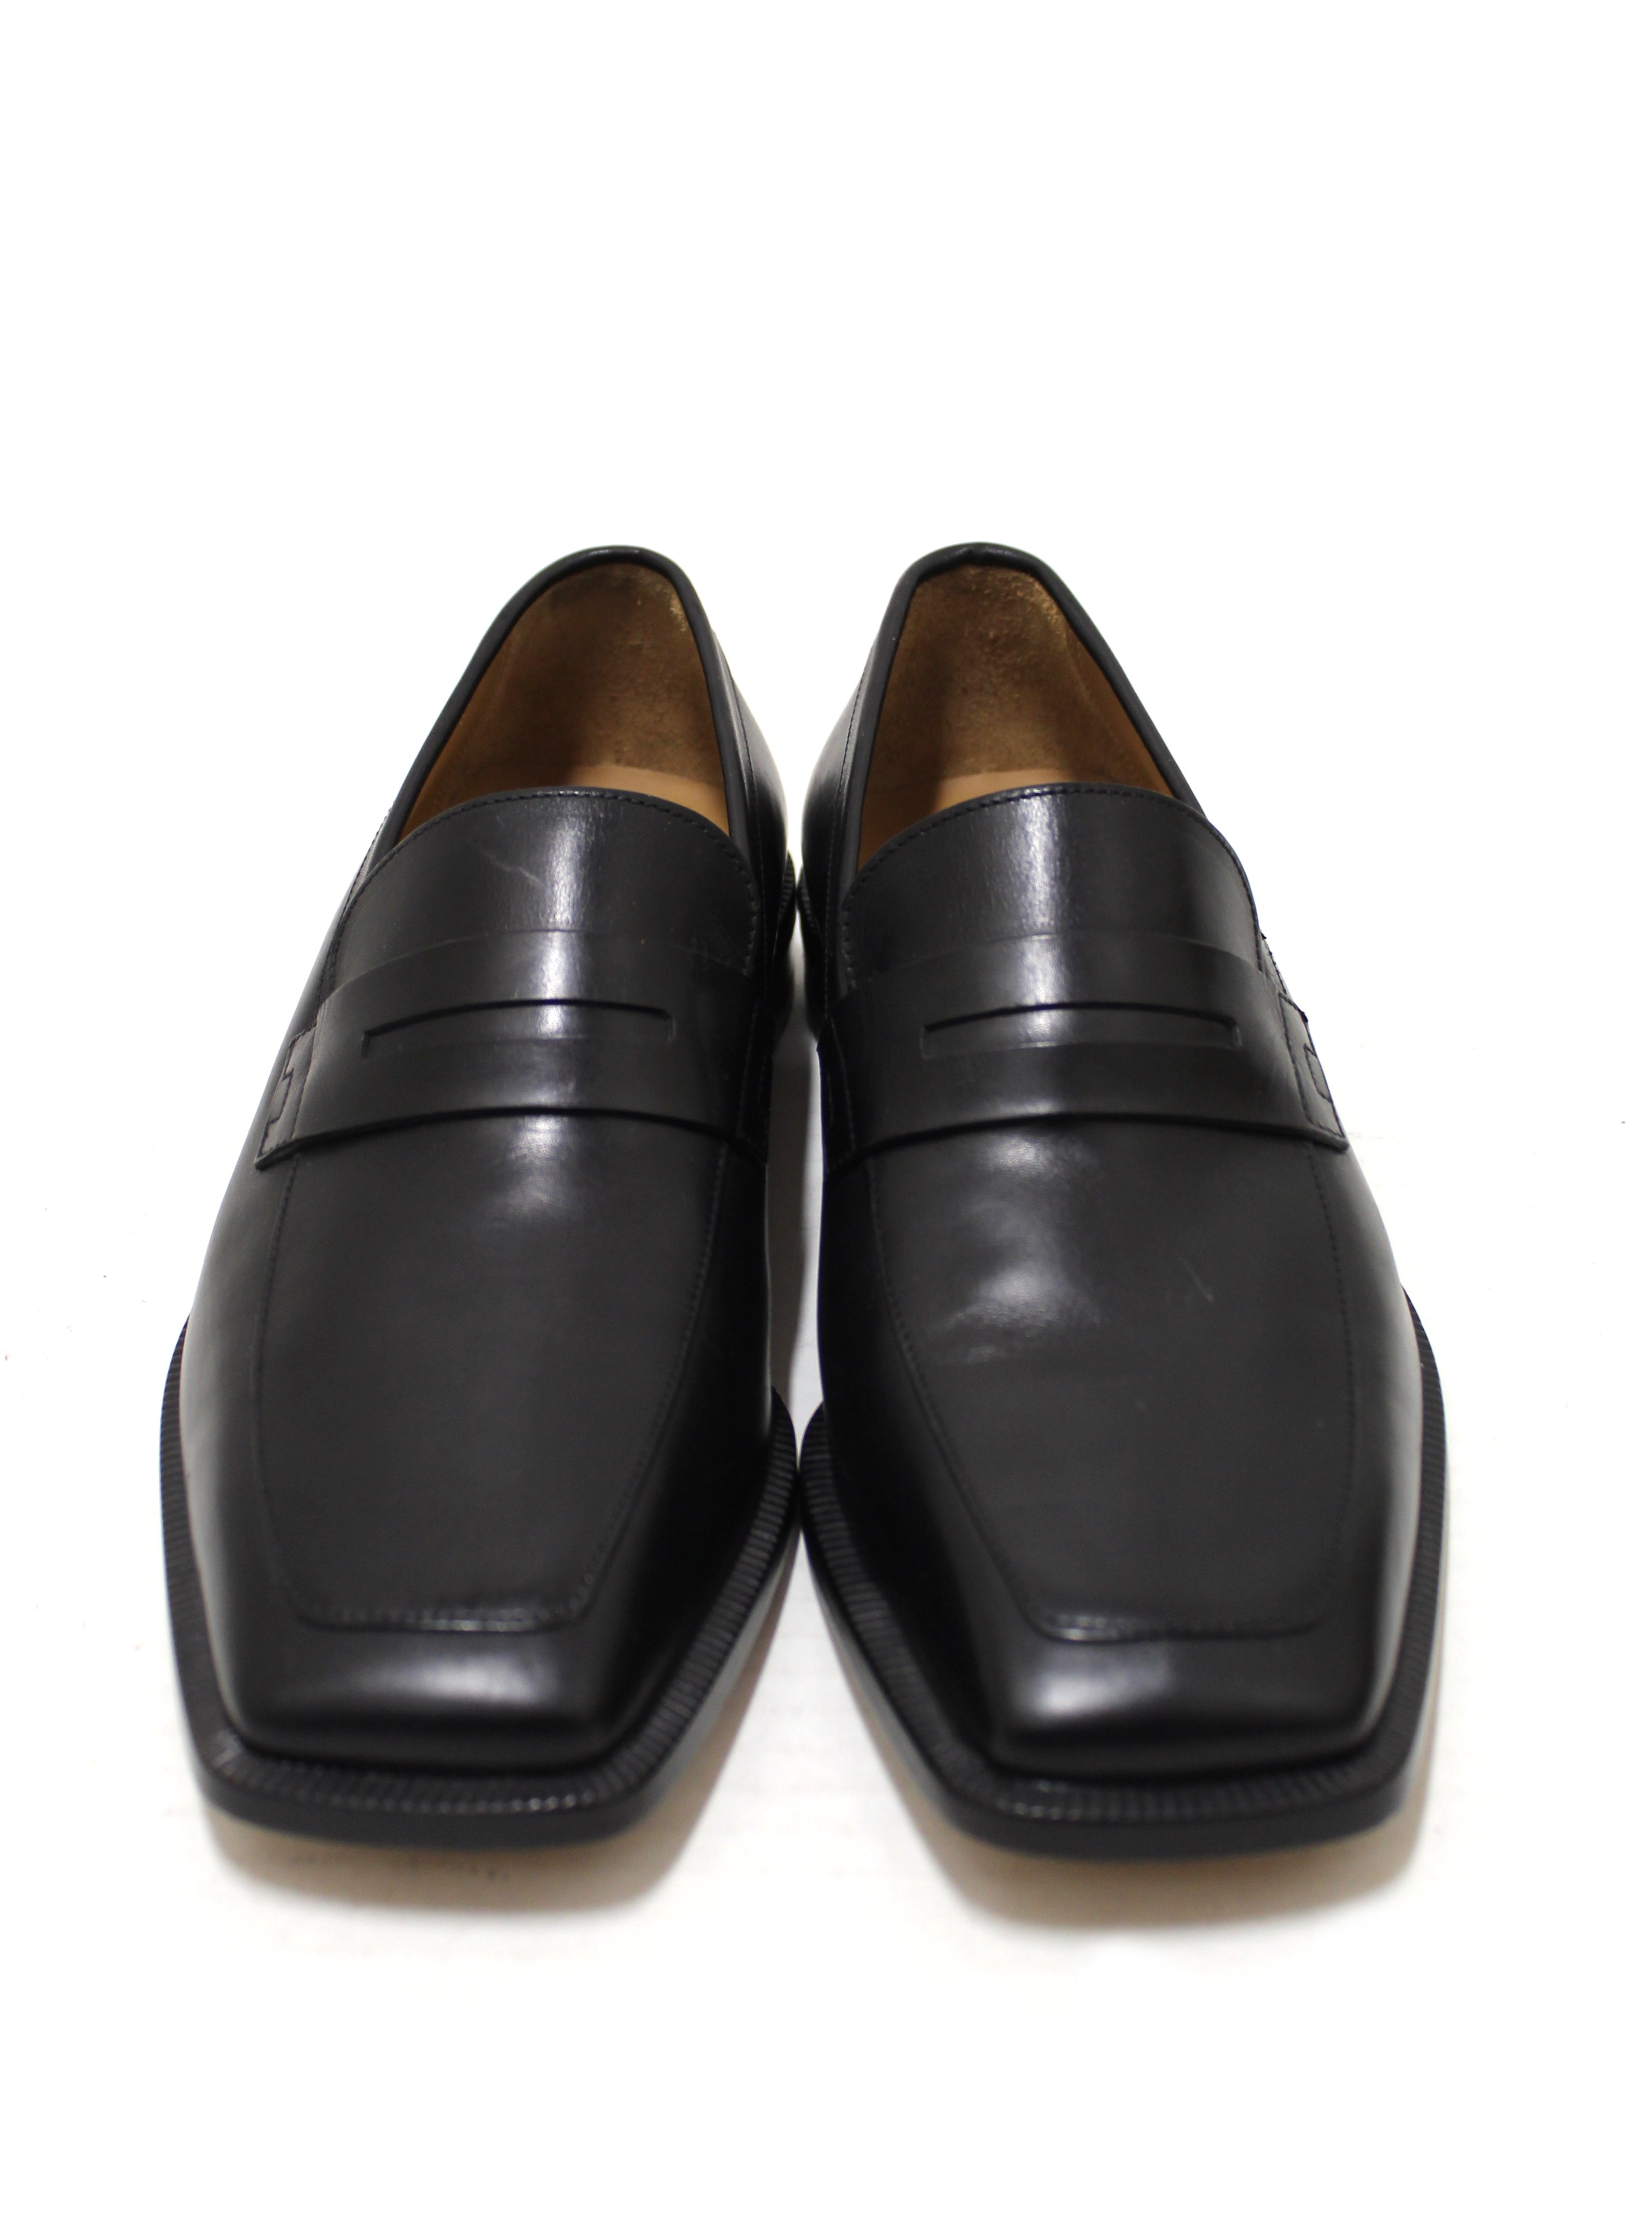 AUTH! Louis Vuitton LV Black Patent Leather Dress Shoes Formal UK 9.5 US  10.5